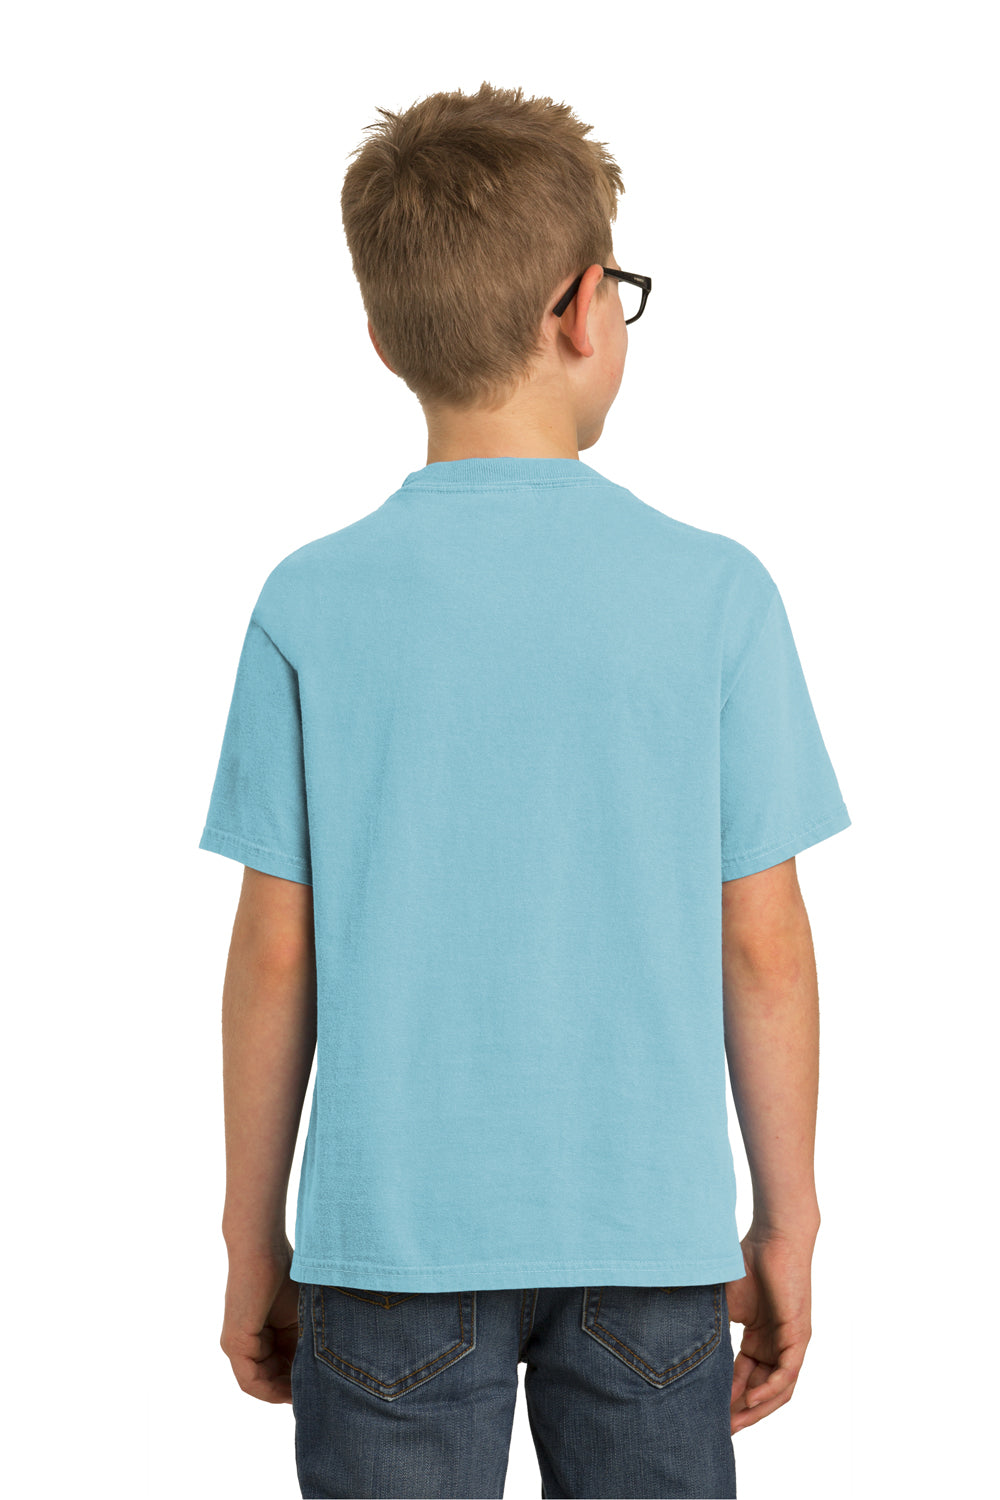 Port & Company PC099Y Youth Beach Wash Short Sleeve Crewneck T-Shirt Mist Blue Back